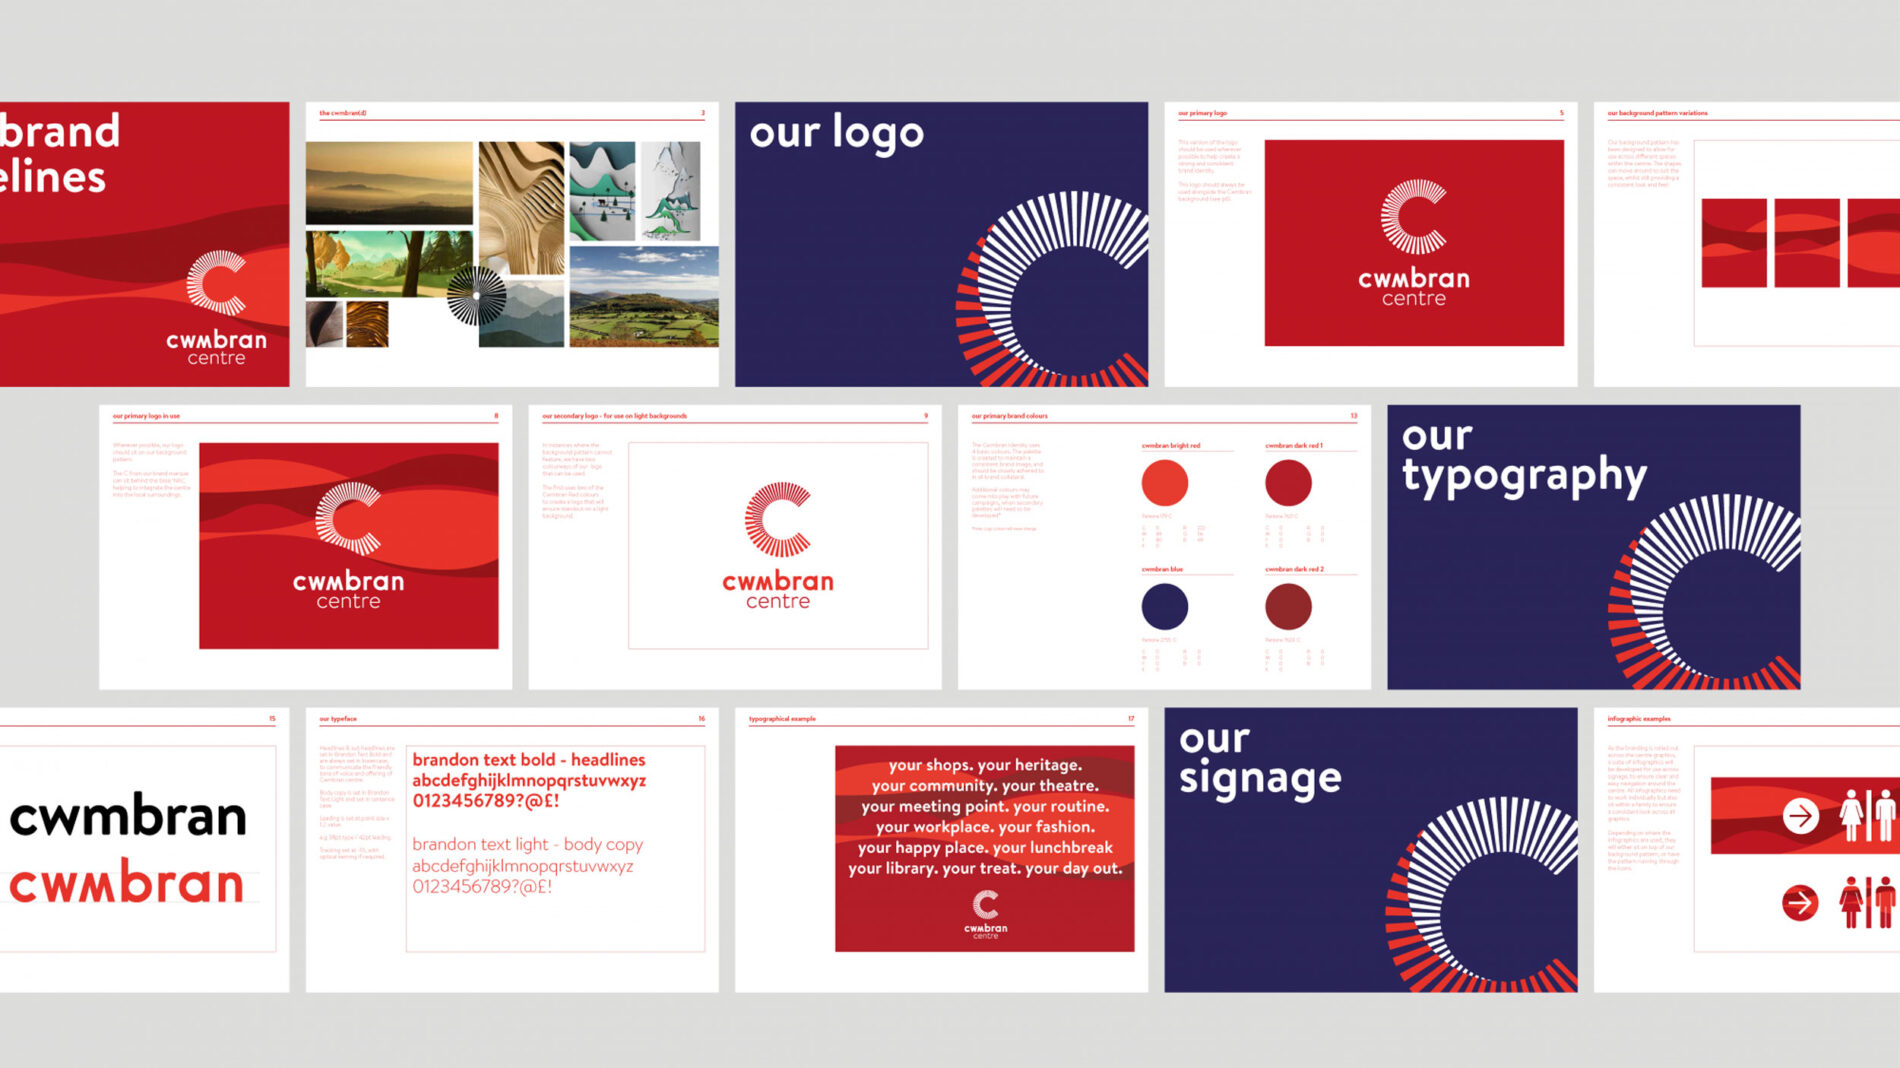 Cwmbran brand guidelines Beyond London Cwmbran Shopping Centre Retail Design Asset Enhancement Brand Identity Signage & Wayfinding Customer Experience design